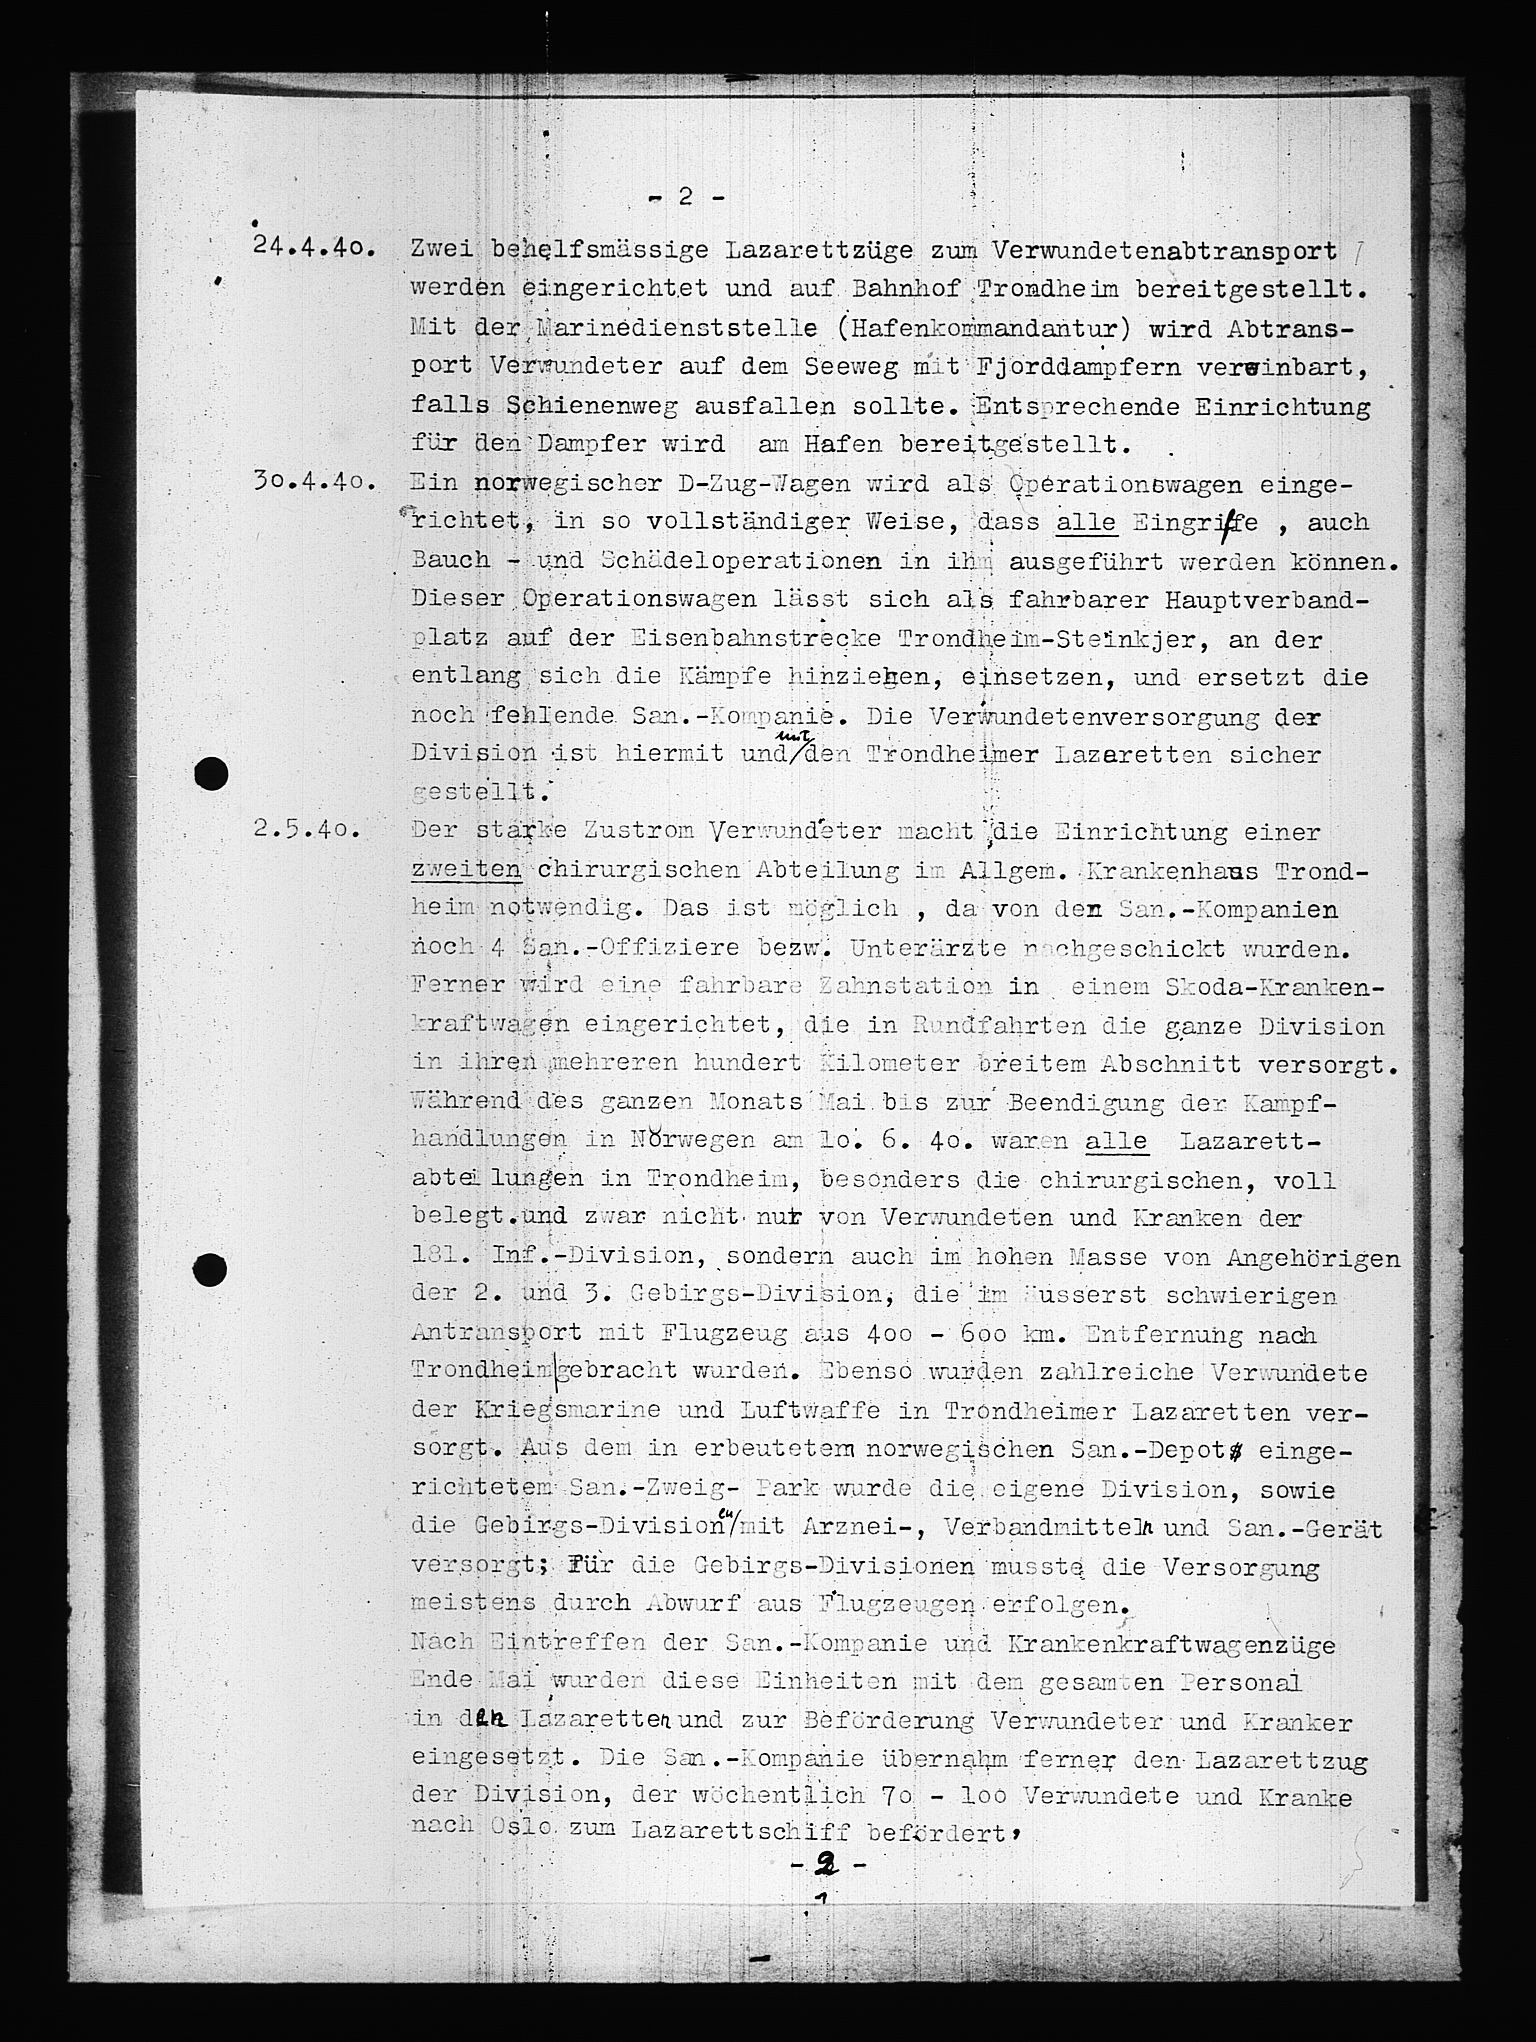 Documents Section, RA/RAFA-2200/V/L0087: Amerikansk mikrofilm "Captured German Documents".
Box No. 726.  FKA jnr. 601/1954., 1940, p. 272